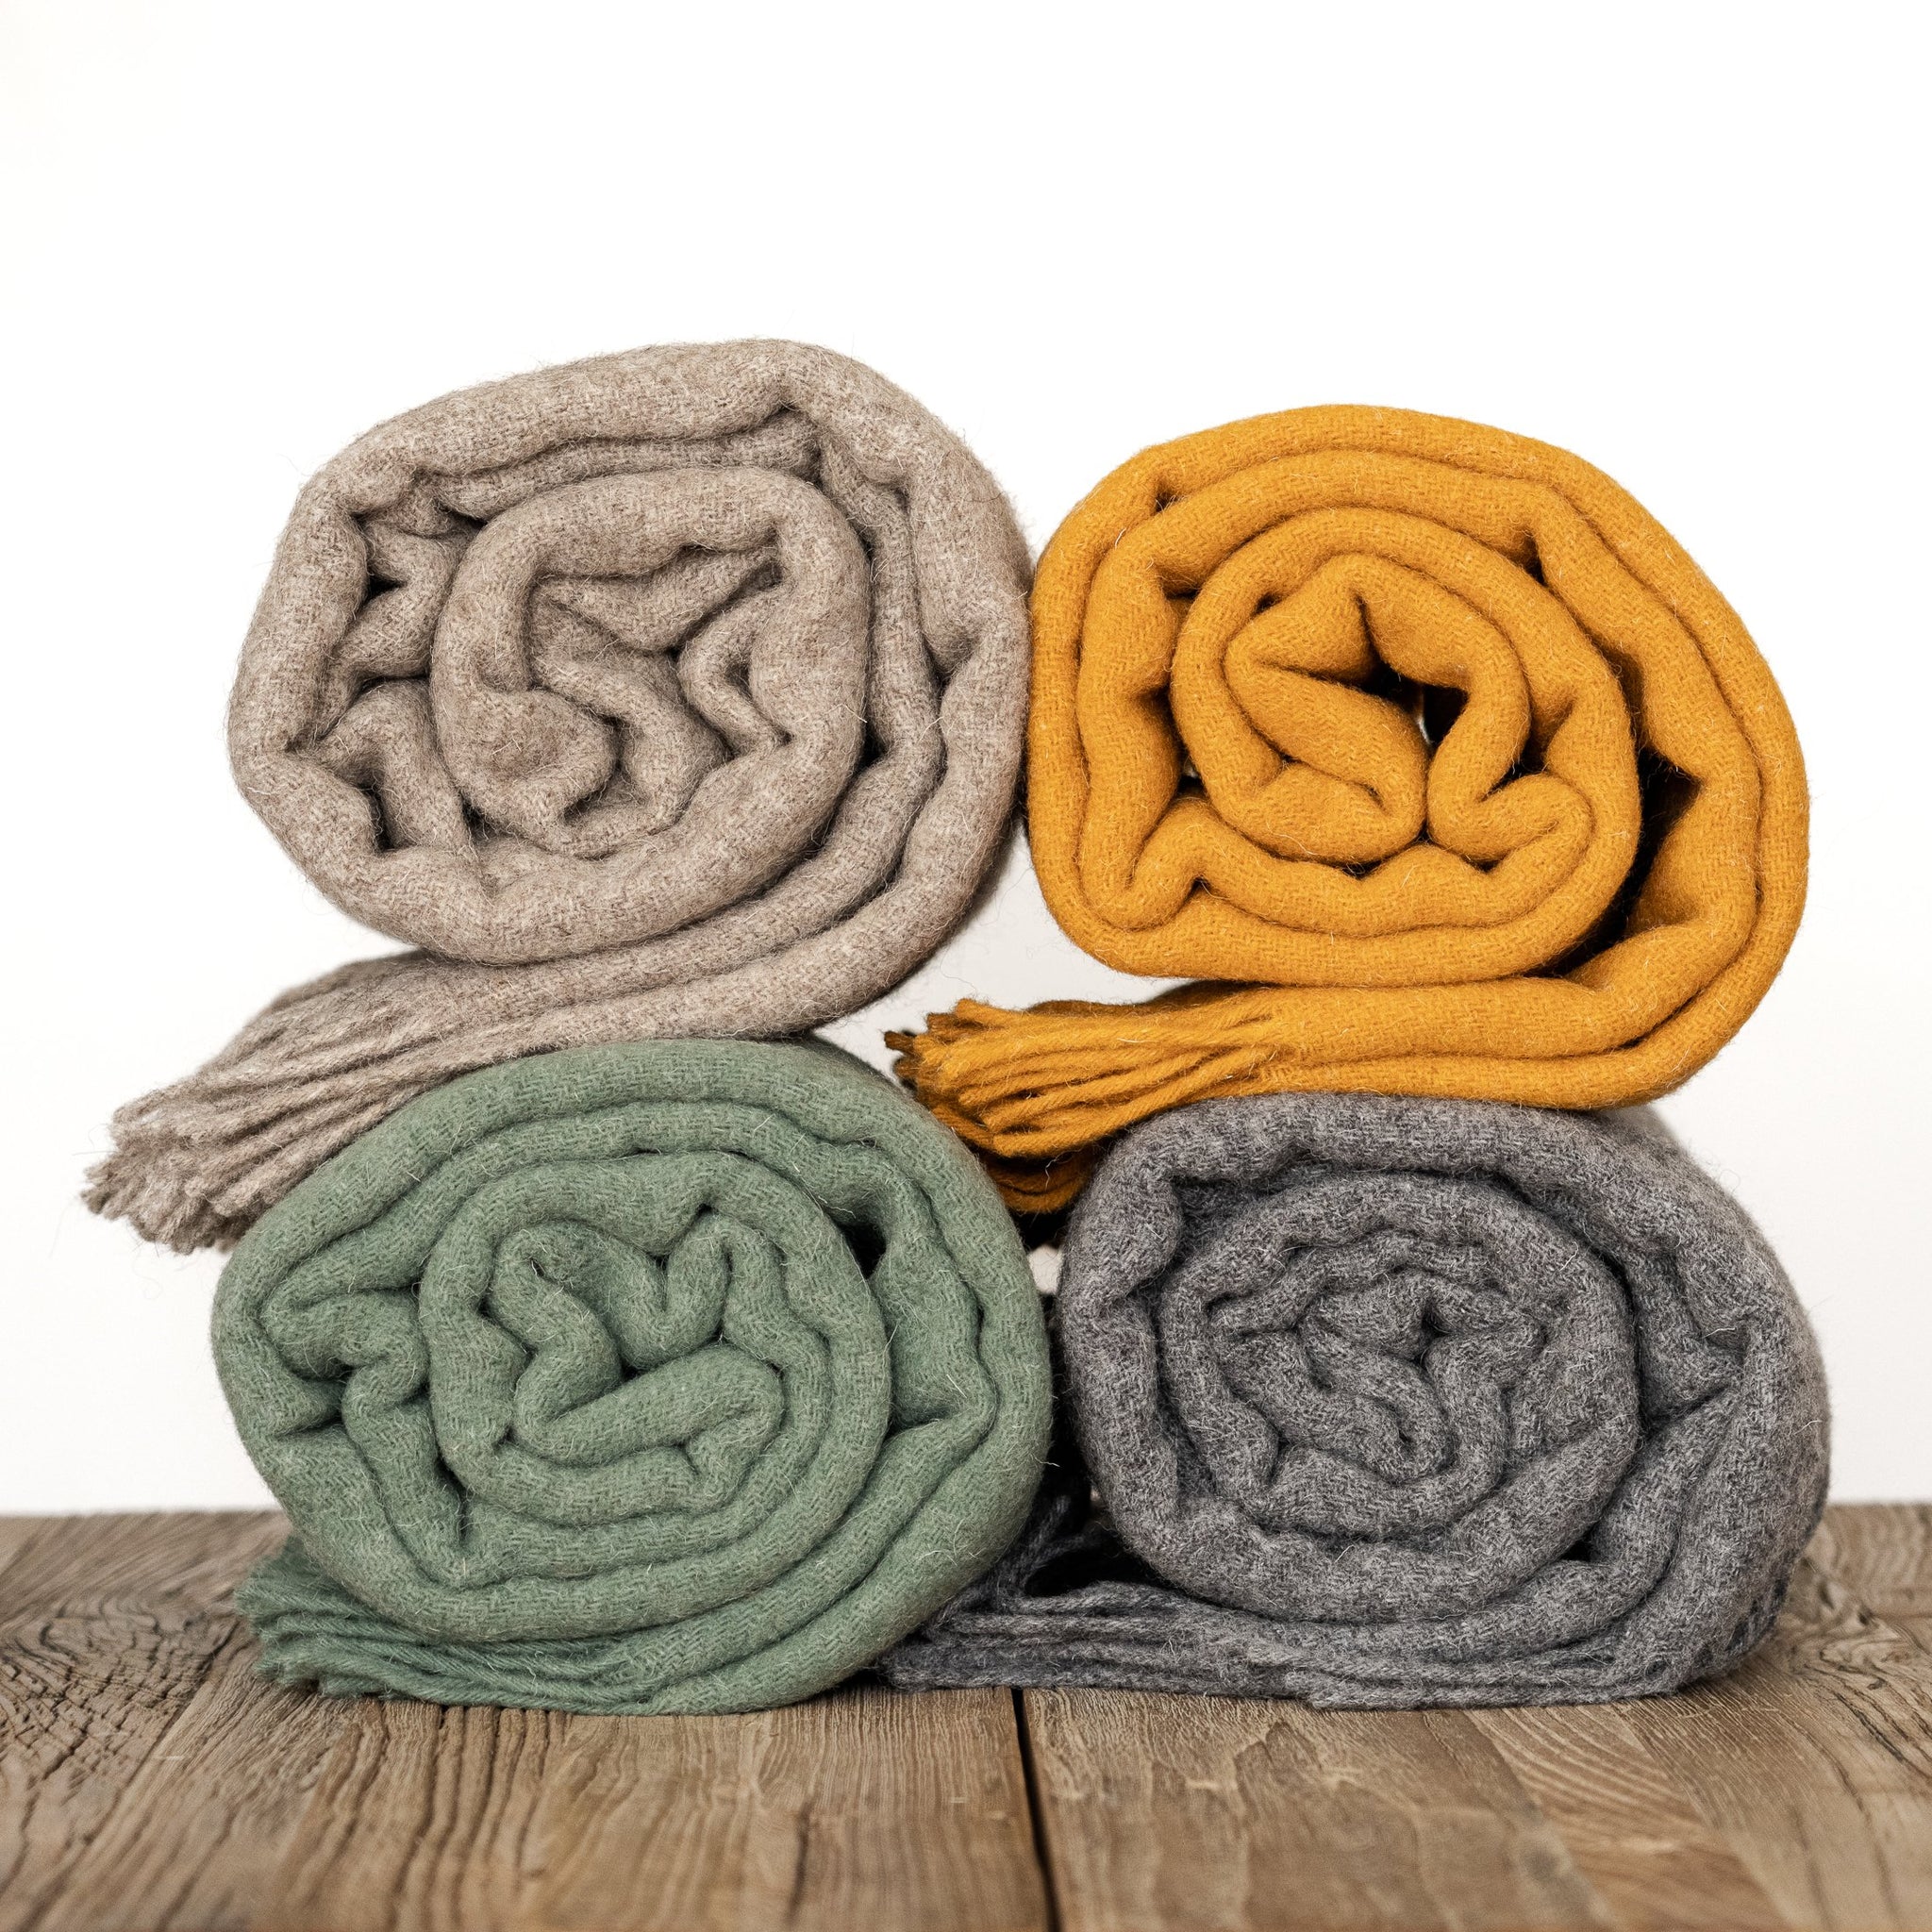 100% natural wool blanket - Amazon